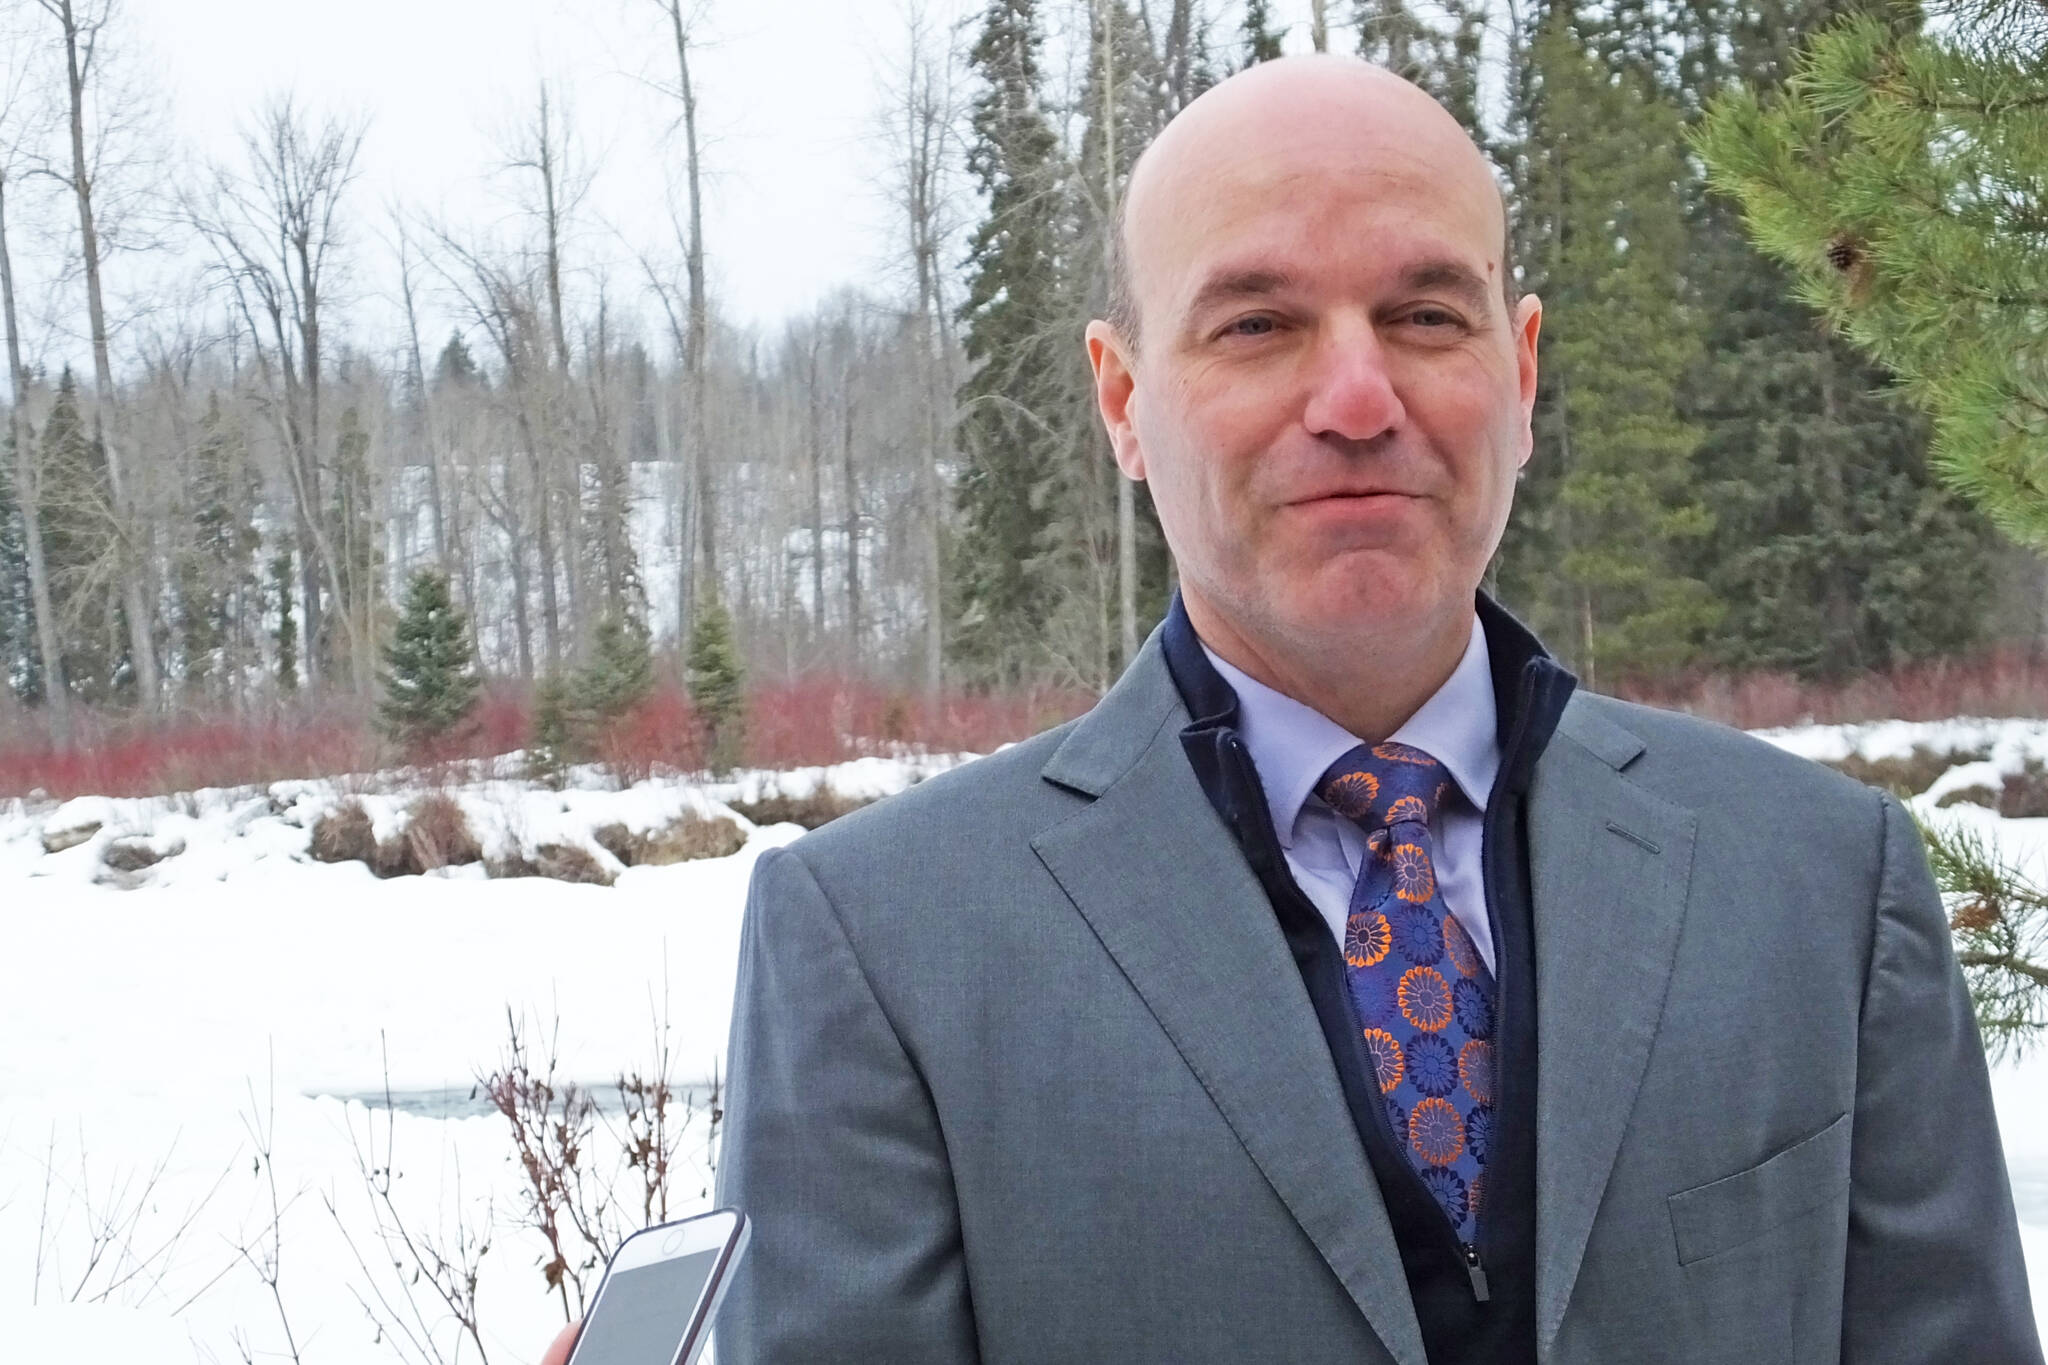 Stikine MLA Nathan Cullen has announced he will not seek the BC NDP leadership. (Chris Gareau photo)